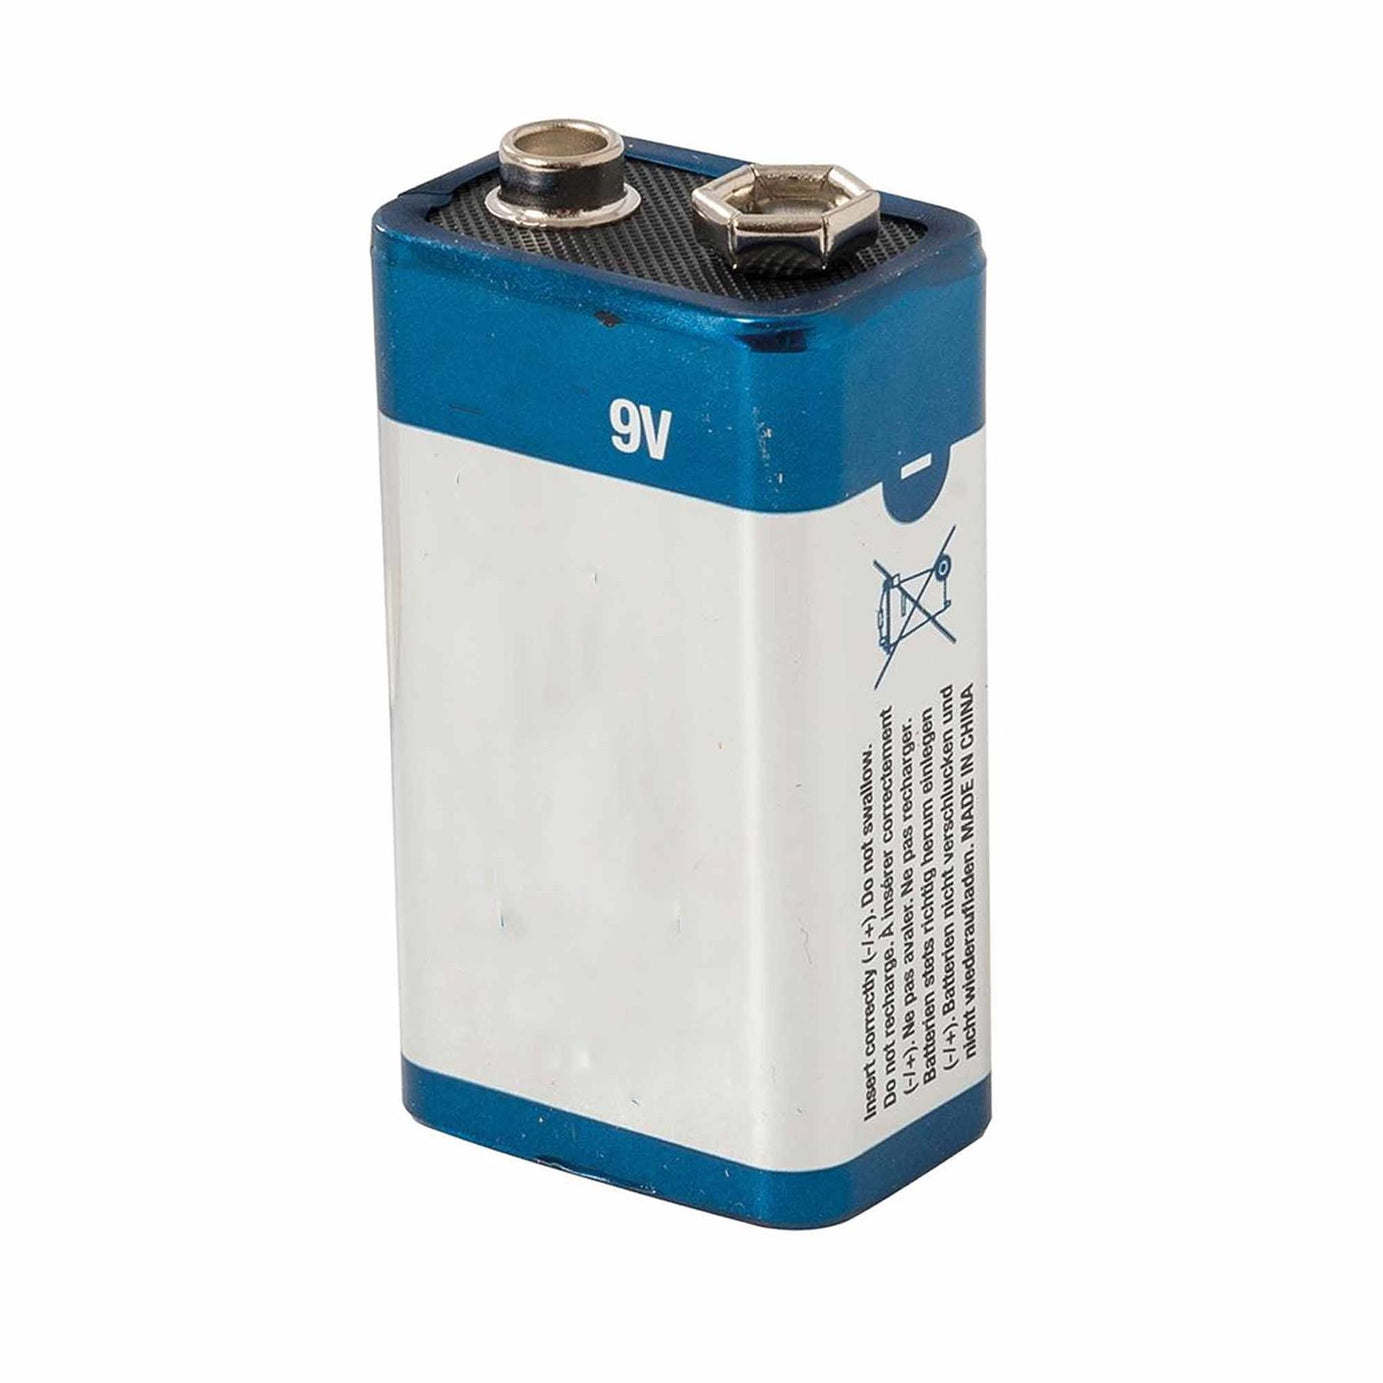 PMaster 9V Square Super Alkaline Battery 6LR61 long lasting high performance 0% Mercury